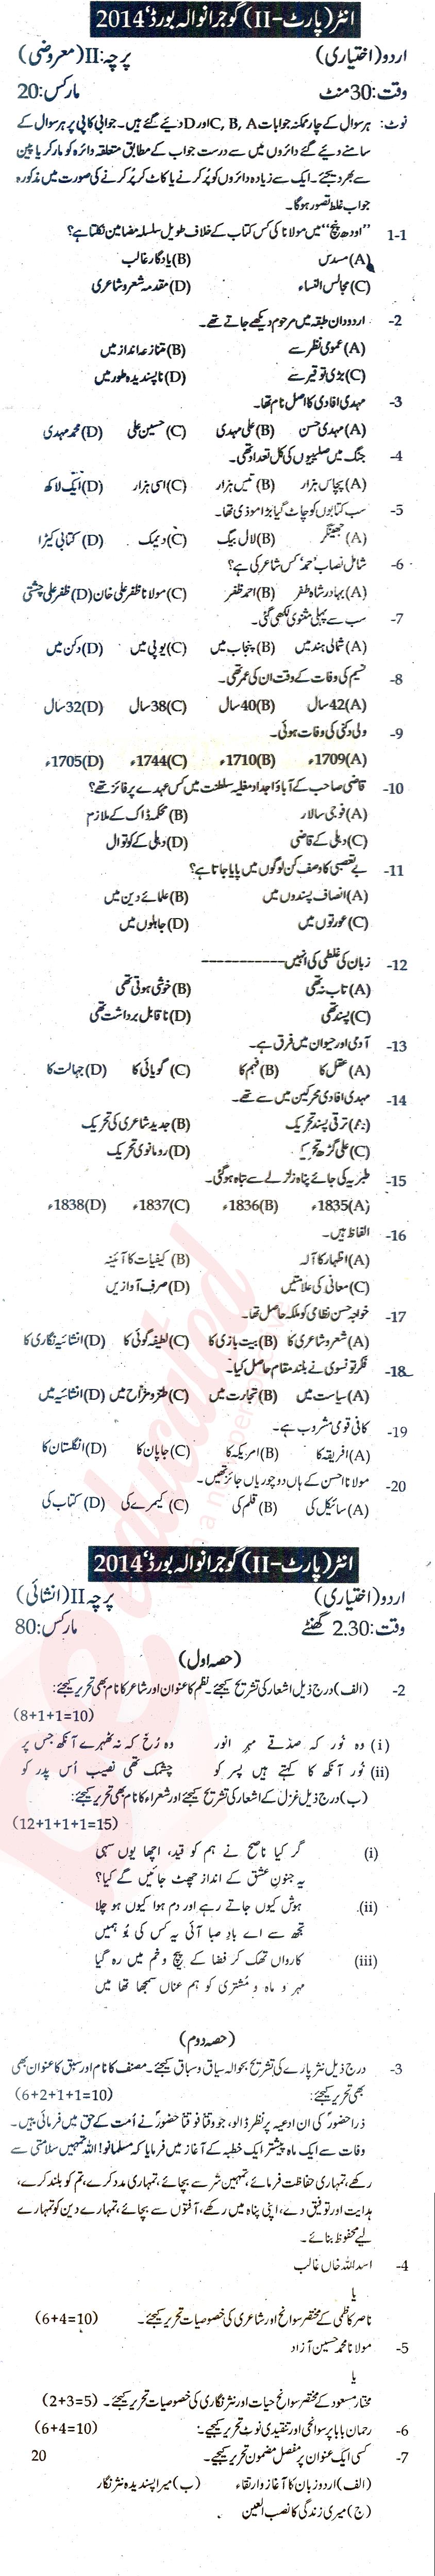 Urdu 12th class Past Paper Group 1 BISE Gujranwala 2014